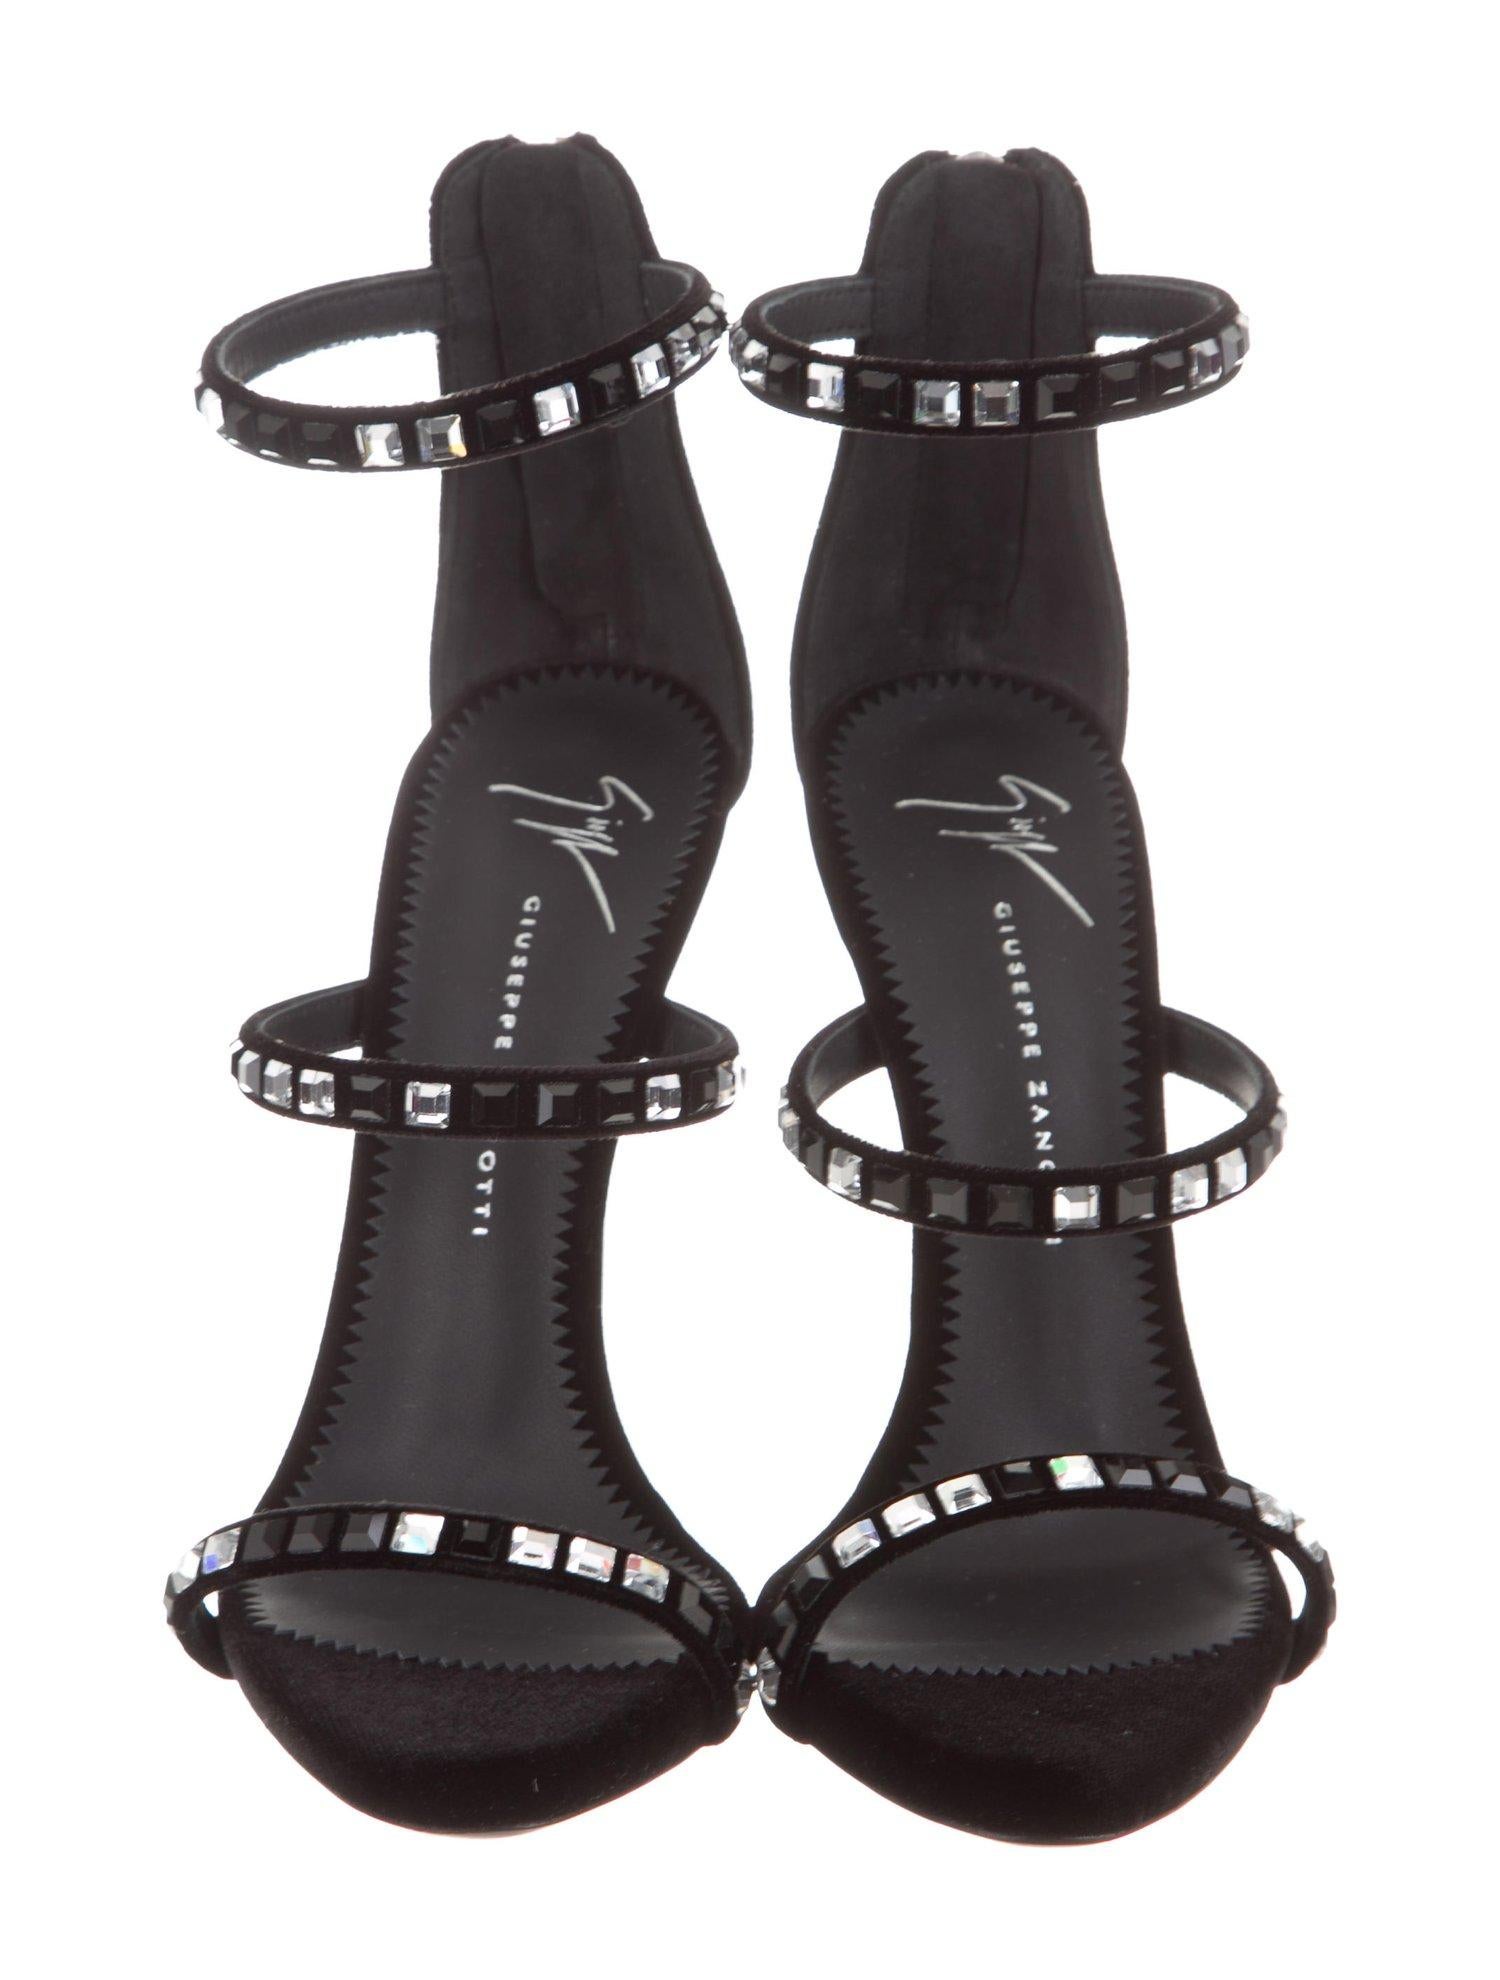 Women's Giuseppe Zanotti NEW Black Suede Crystal Evening Sandals Heels in Box